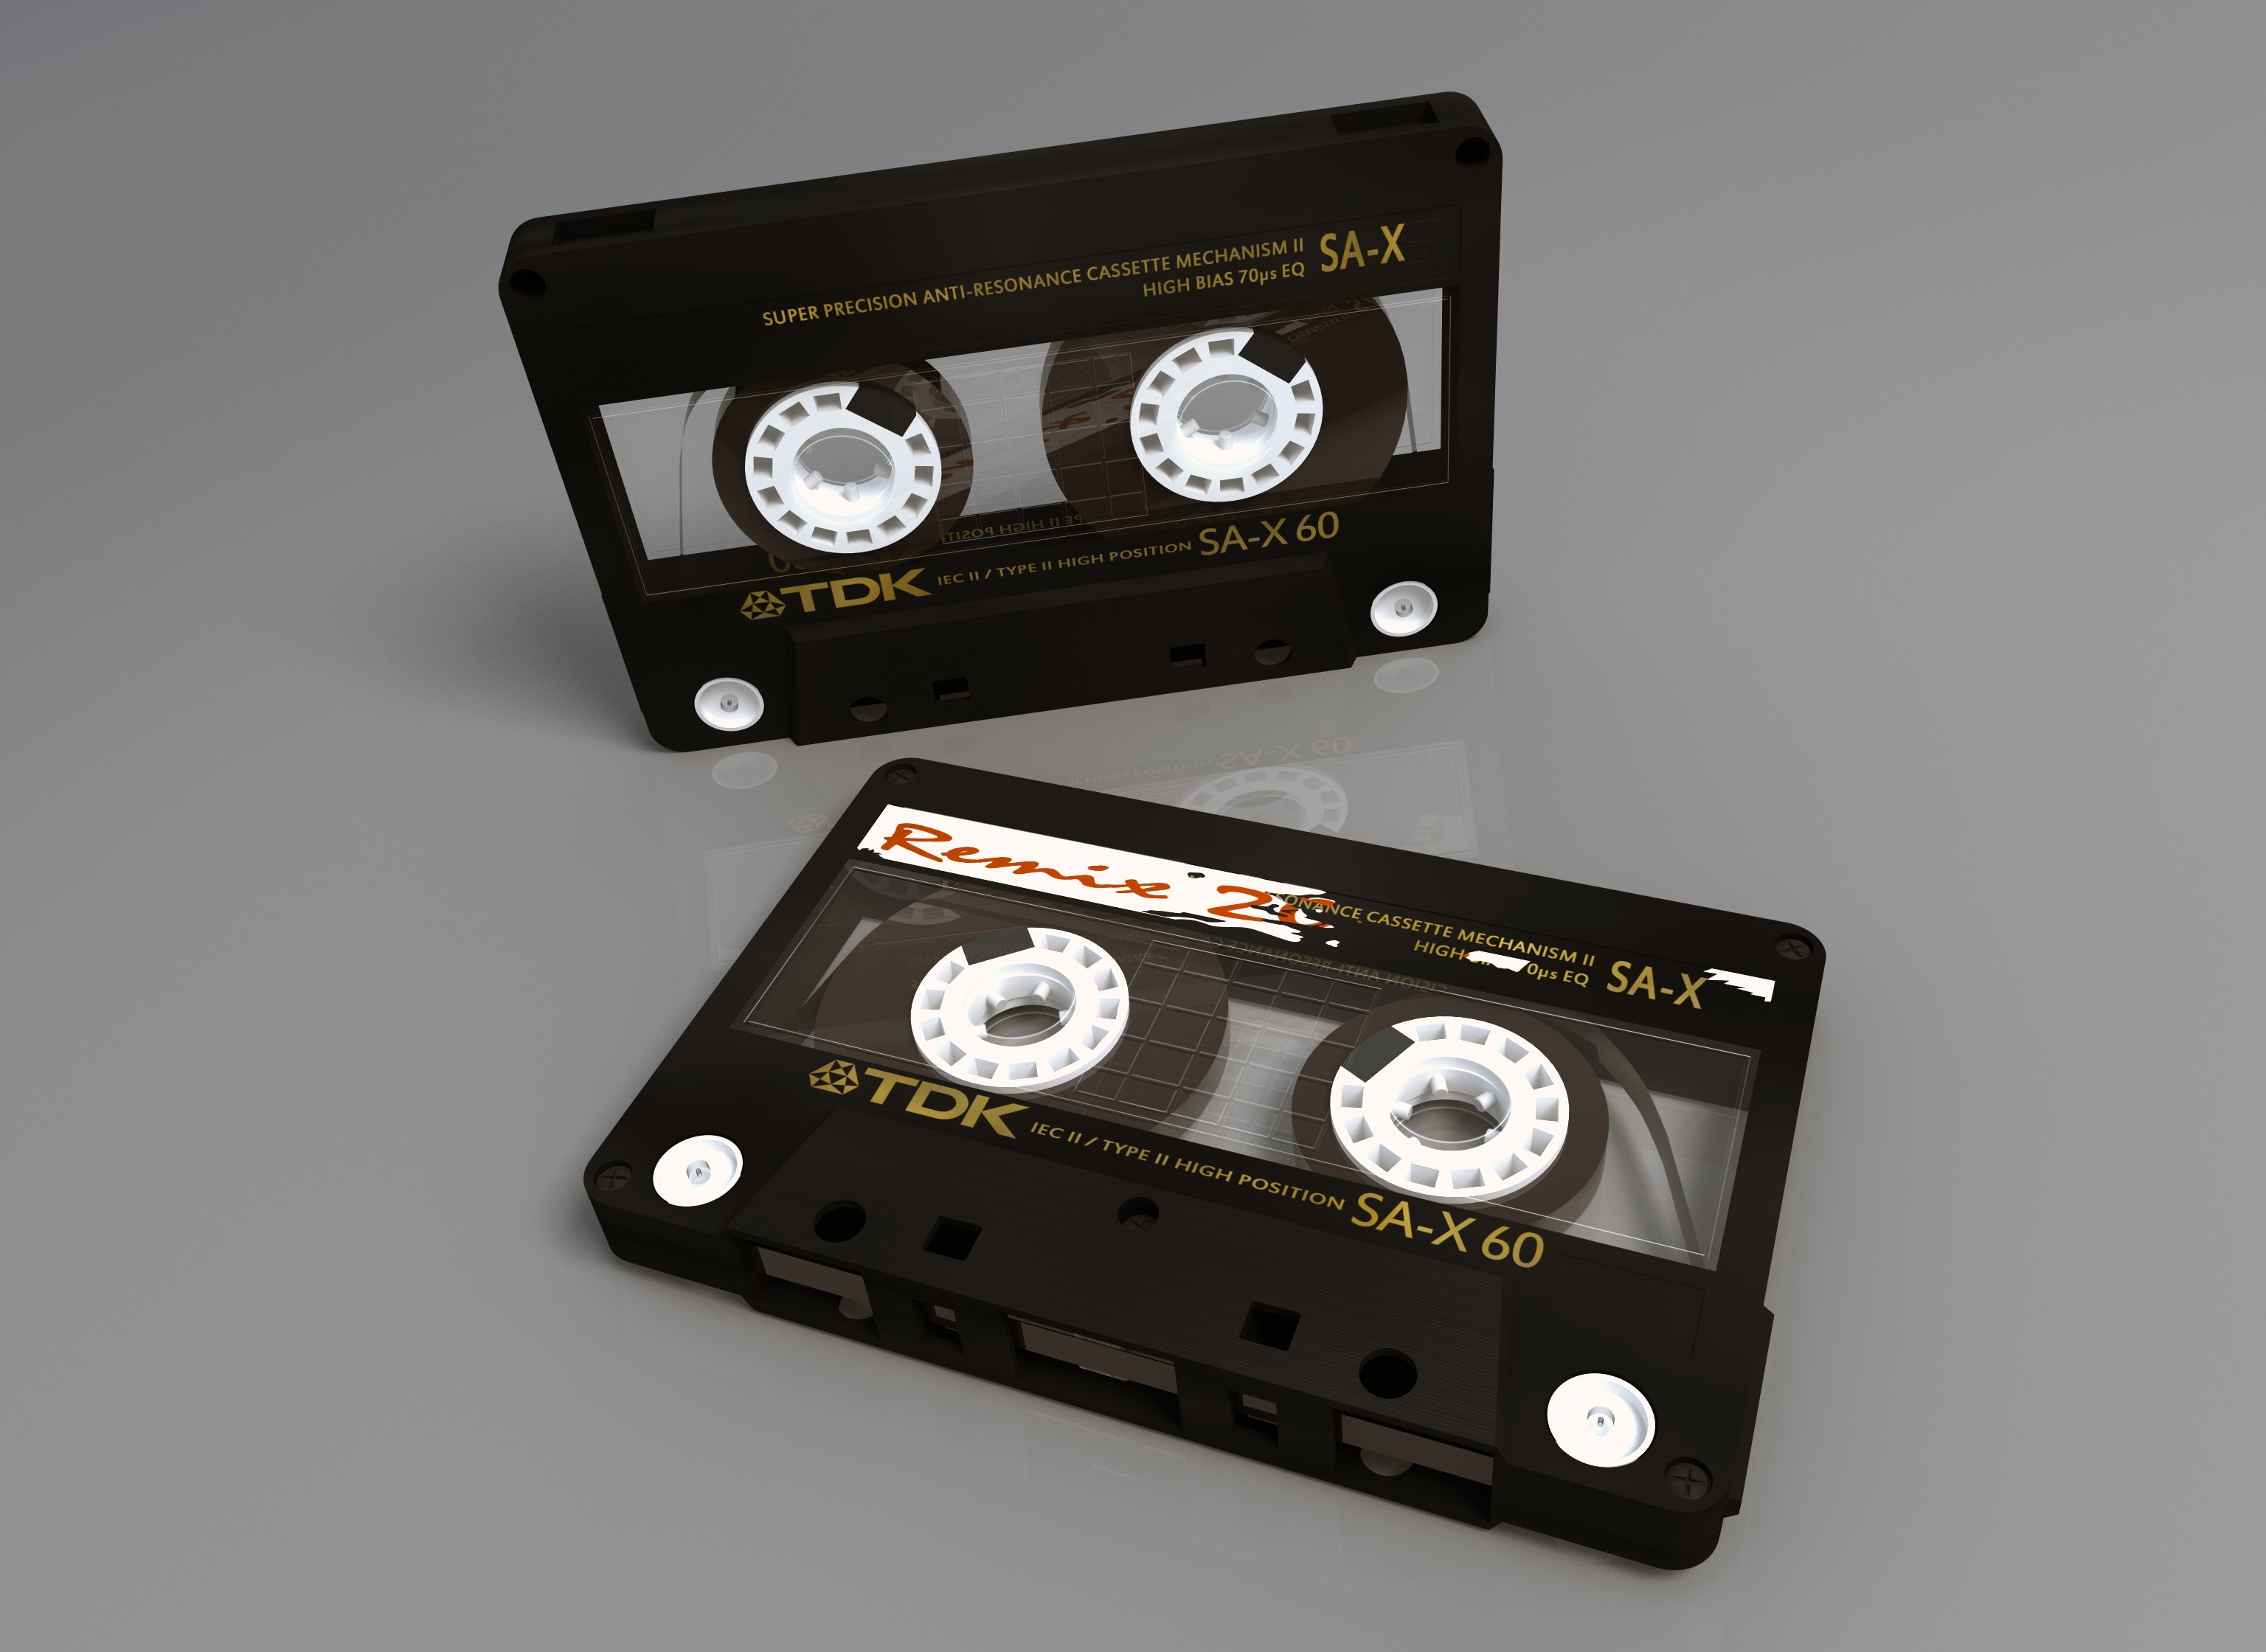 Black and white cassette tape photo